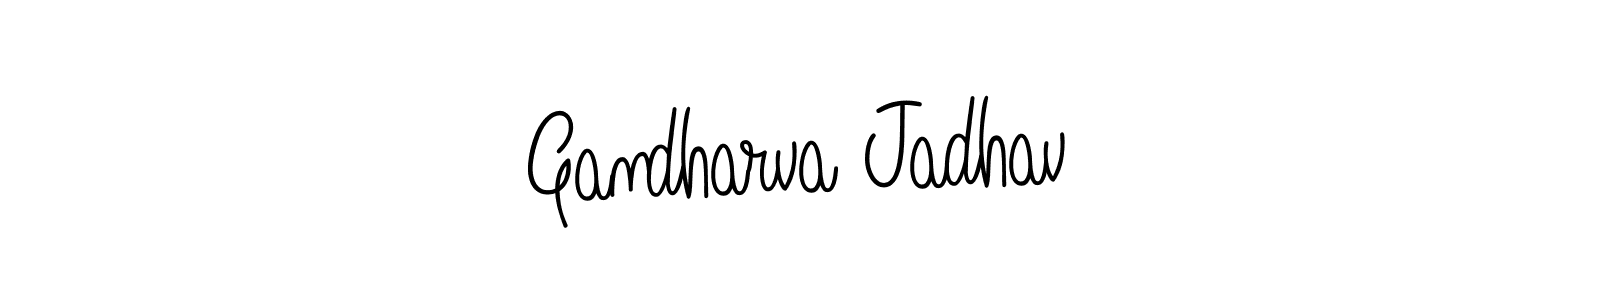 How to Draw Gandharva Jadhav signature style? Angelique-Rose-font-FFP is a latest design signature styles for name Gandharva Jadhav. Gandharva Jadhav signature style 5 images and pictures png